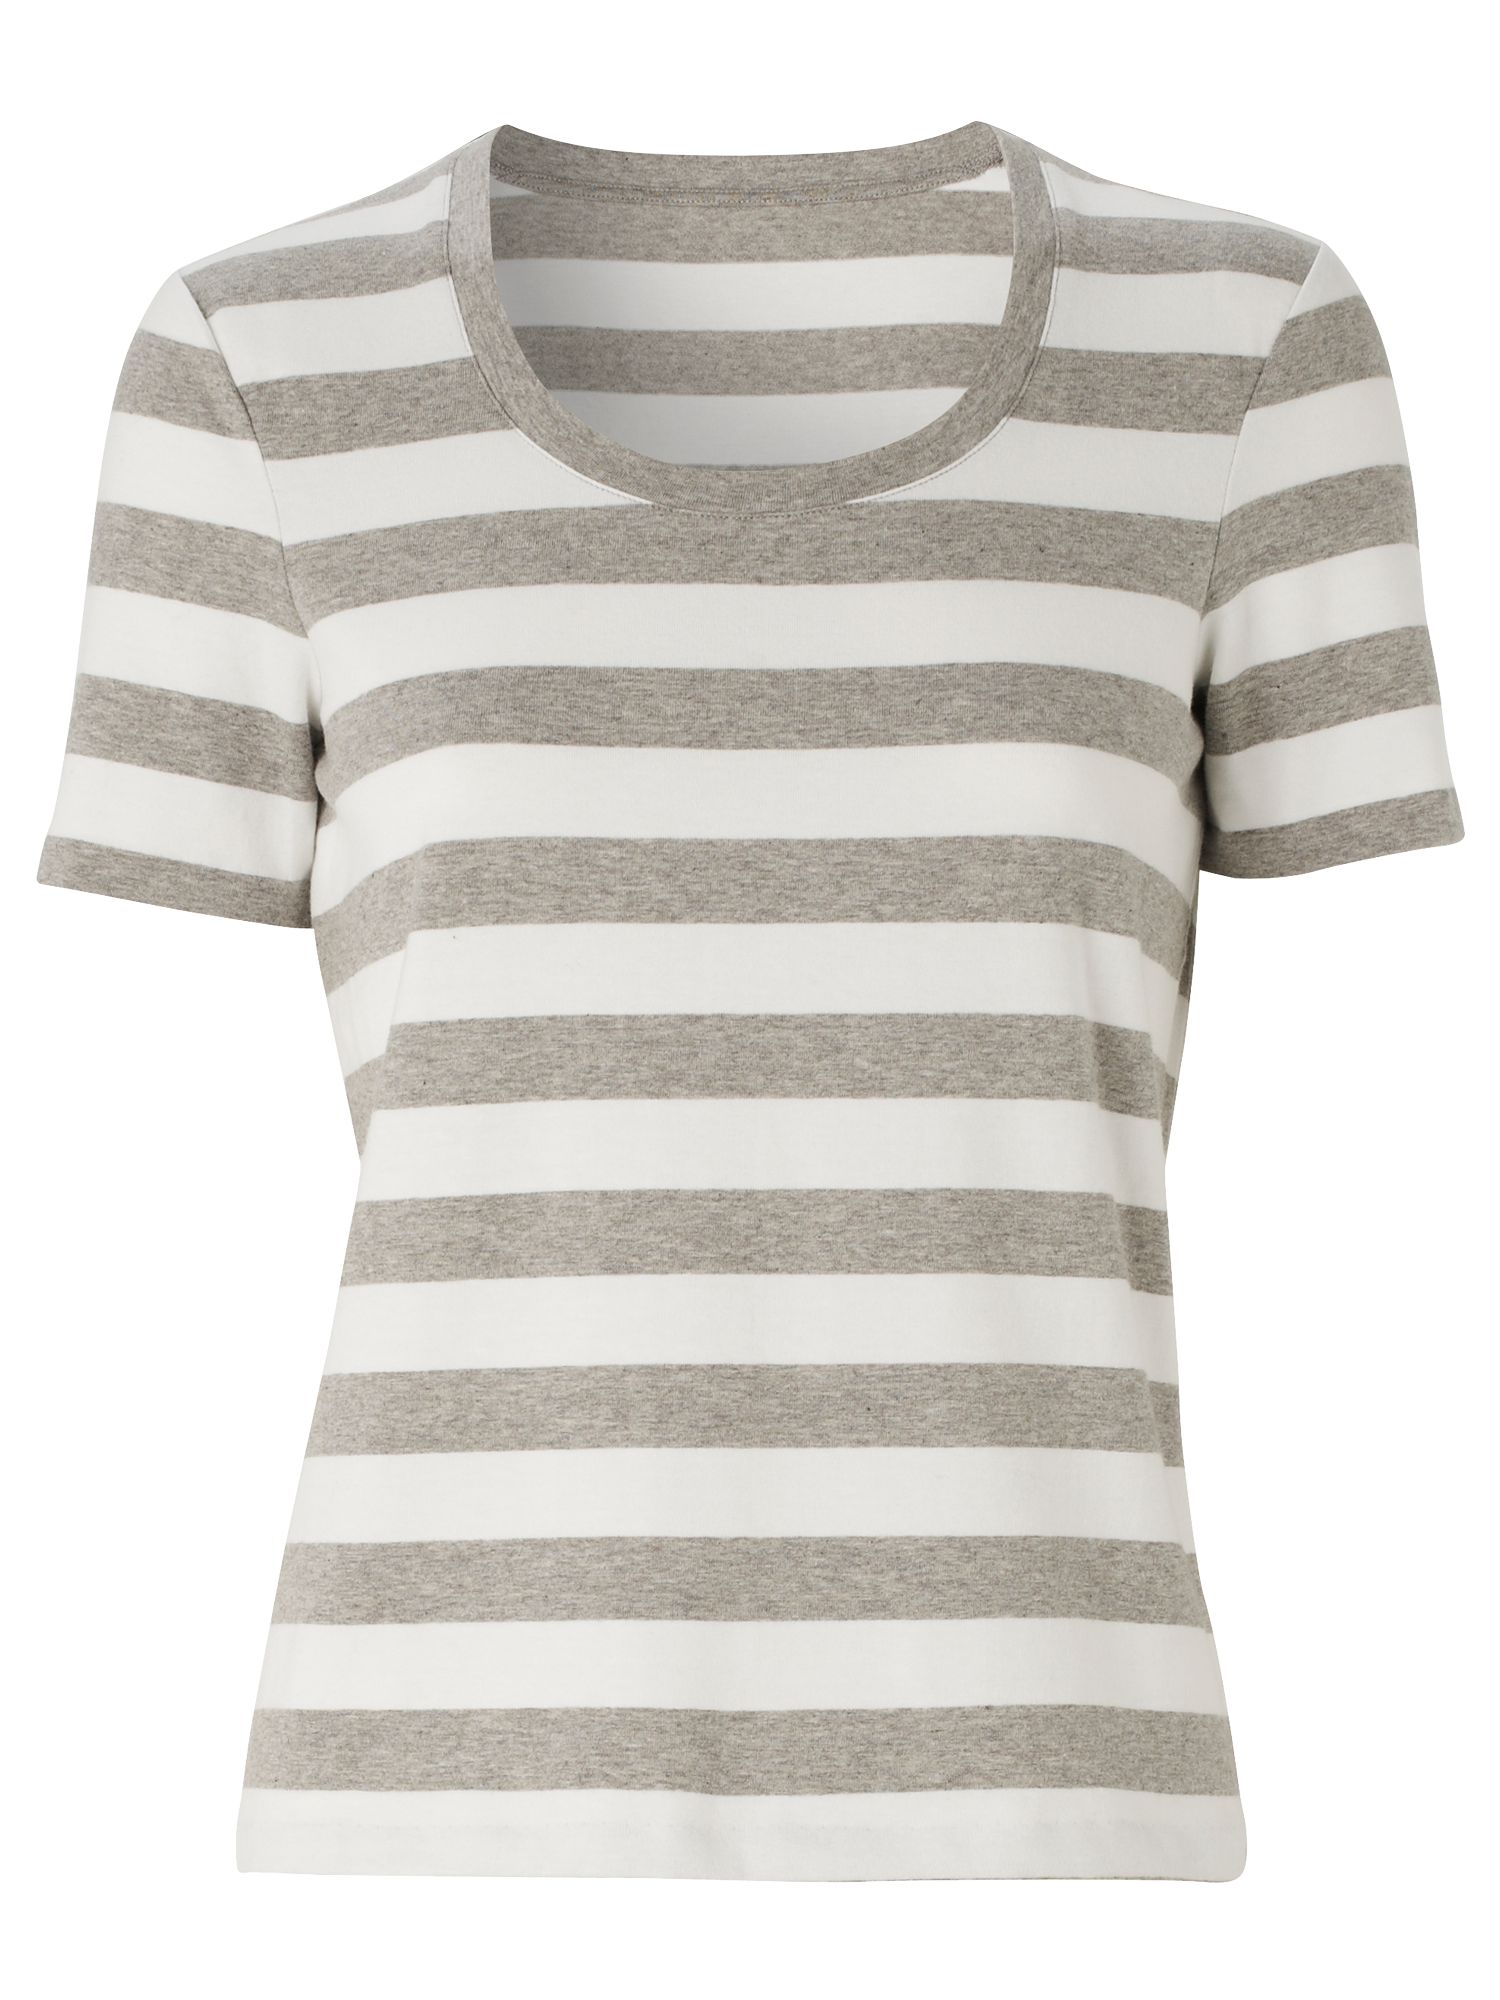 Hobbs Cherre Stripe T-Shirt, Grey Marl White